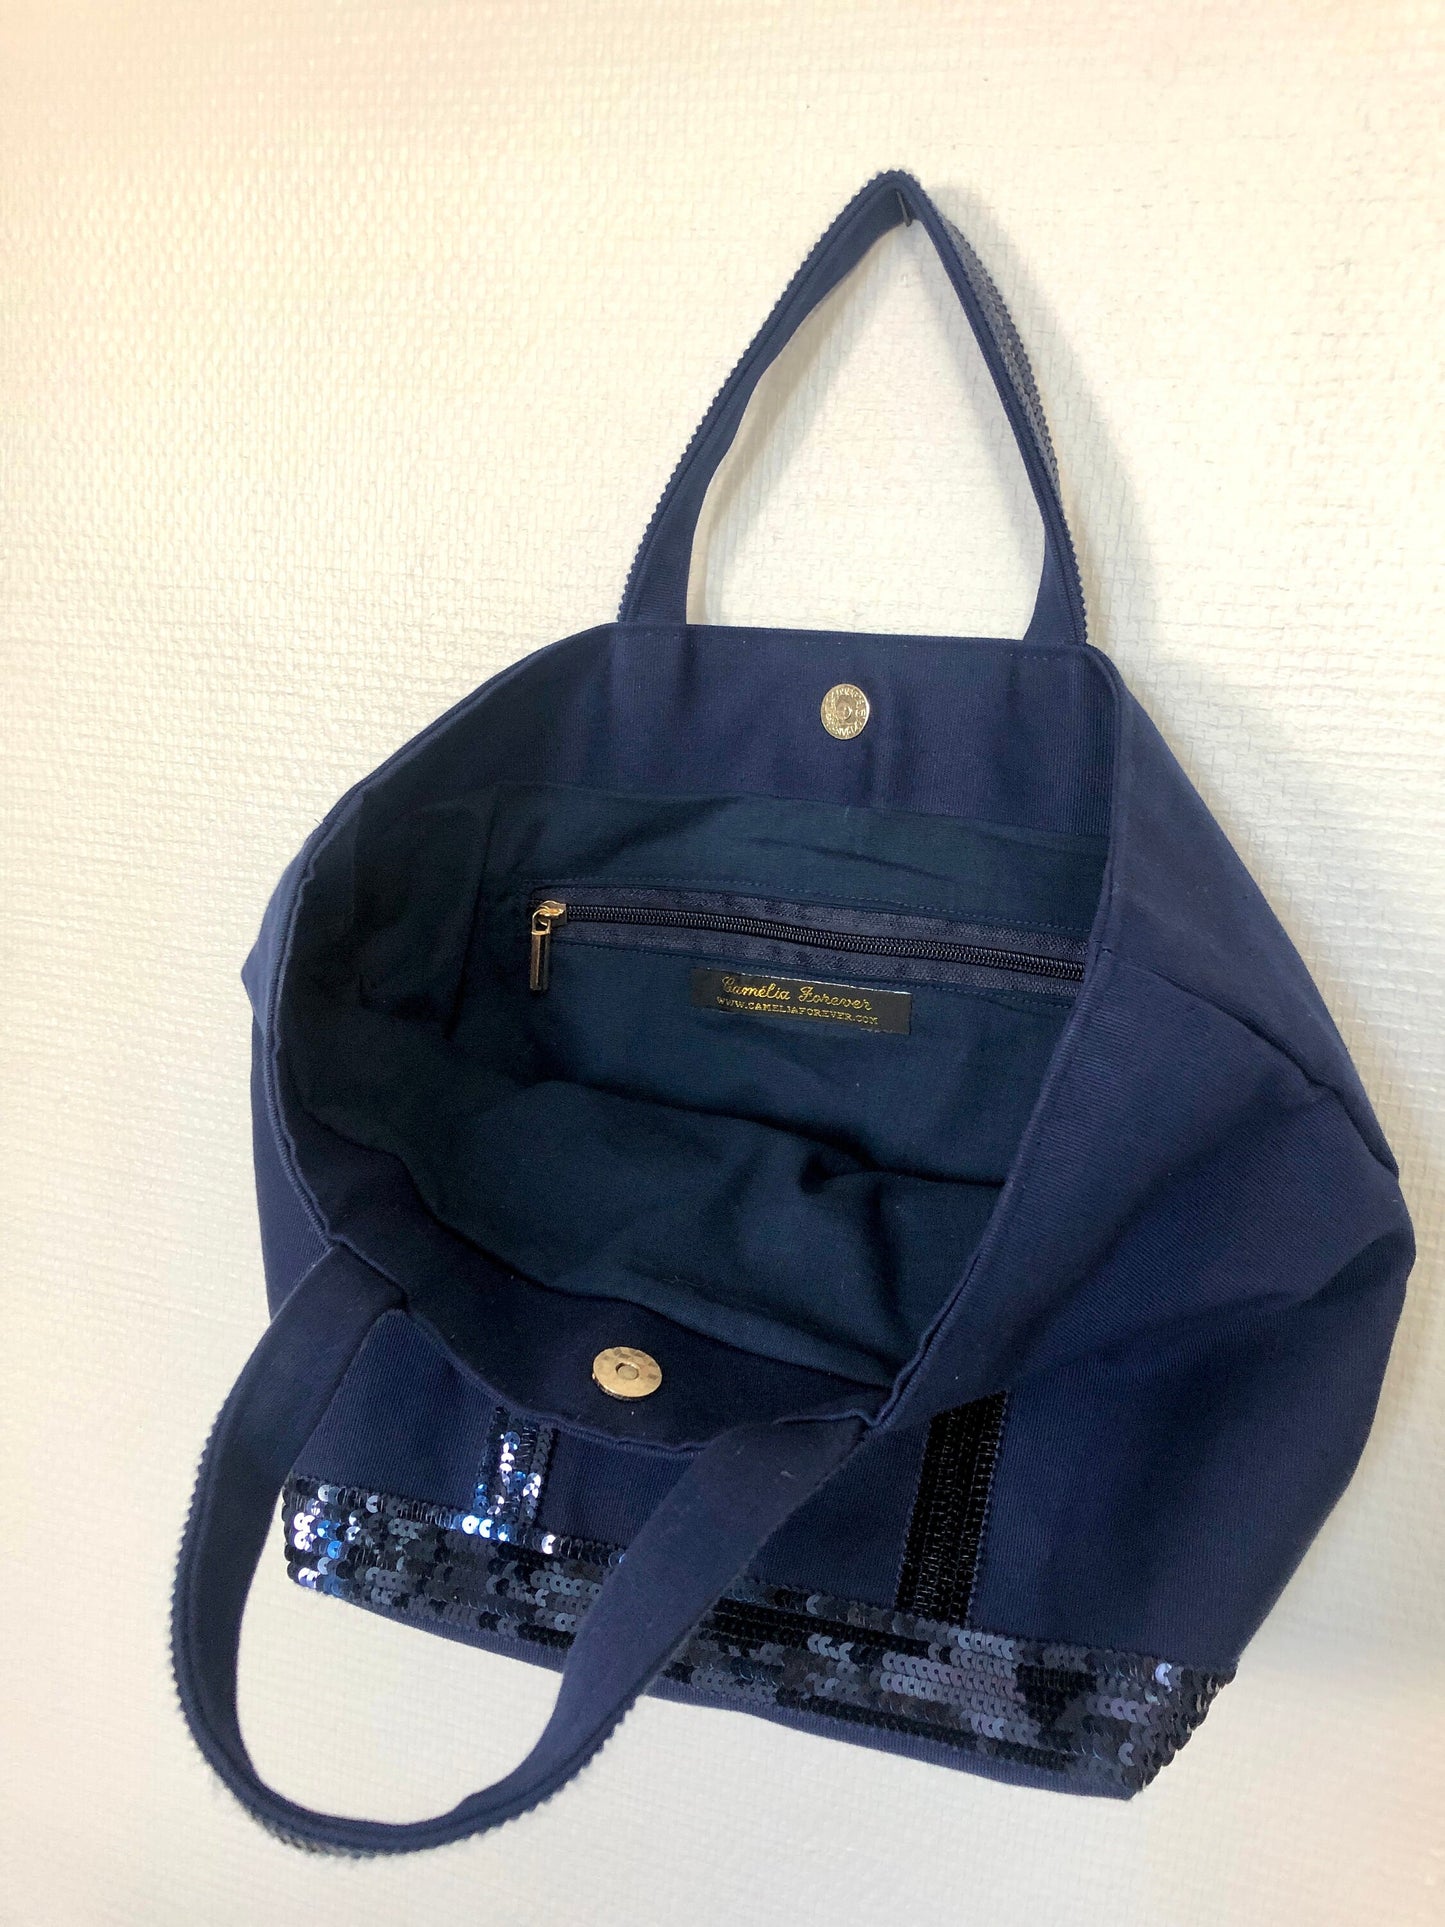 Navy cotton sequin tote bag, handheld navy shopper, French chic sequin purse, Emilie in Paris style, Paris chic purse,